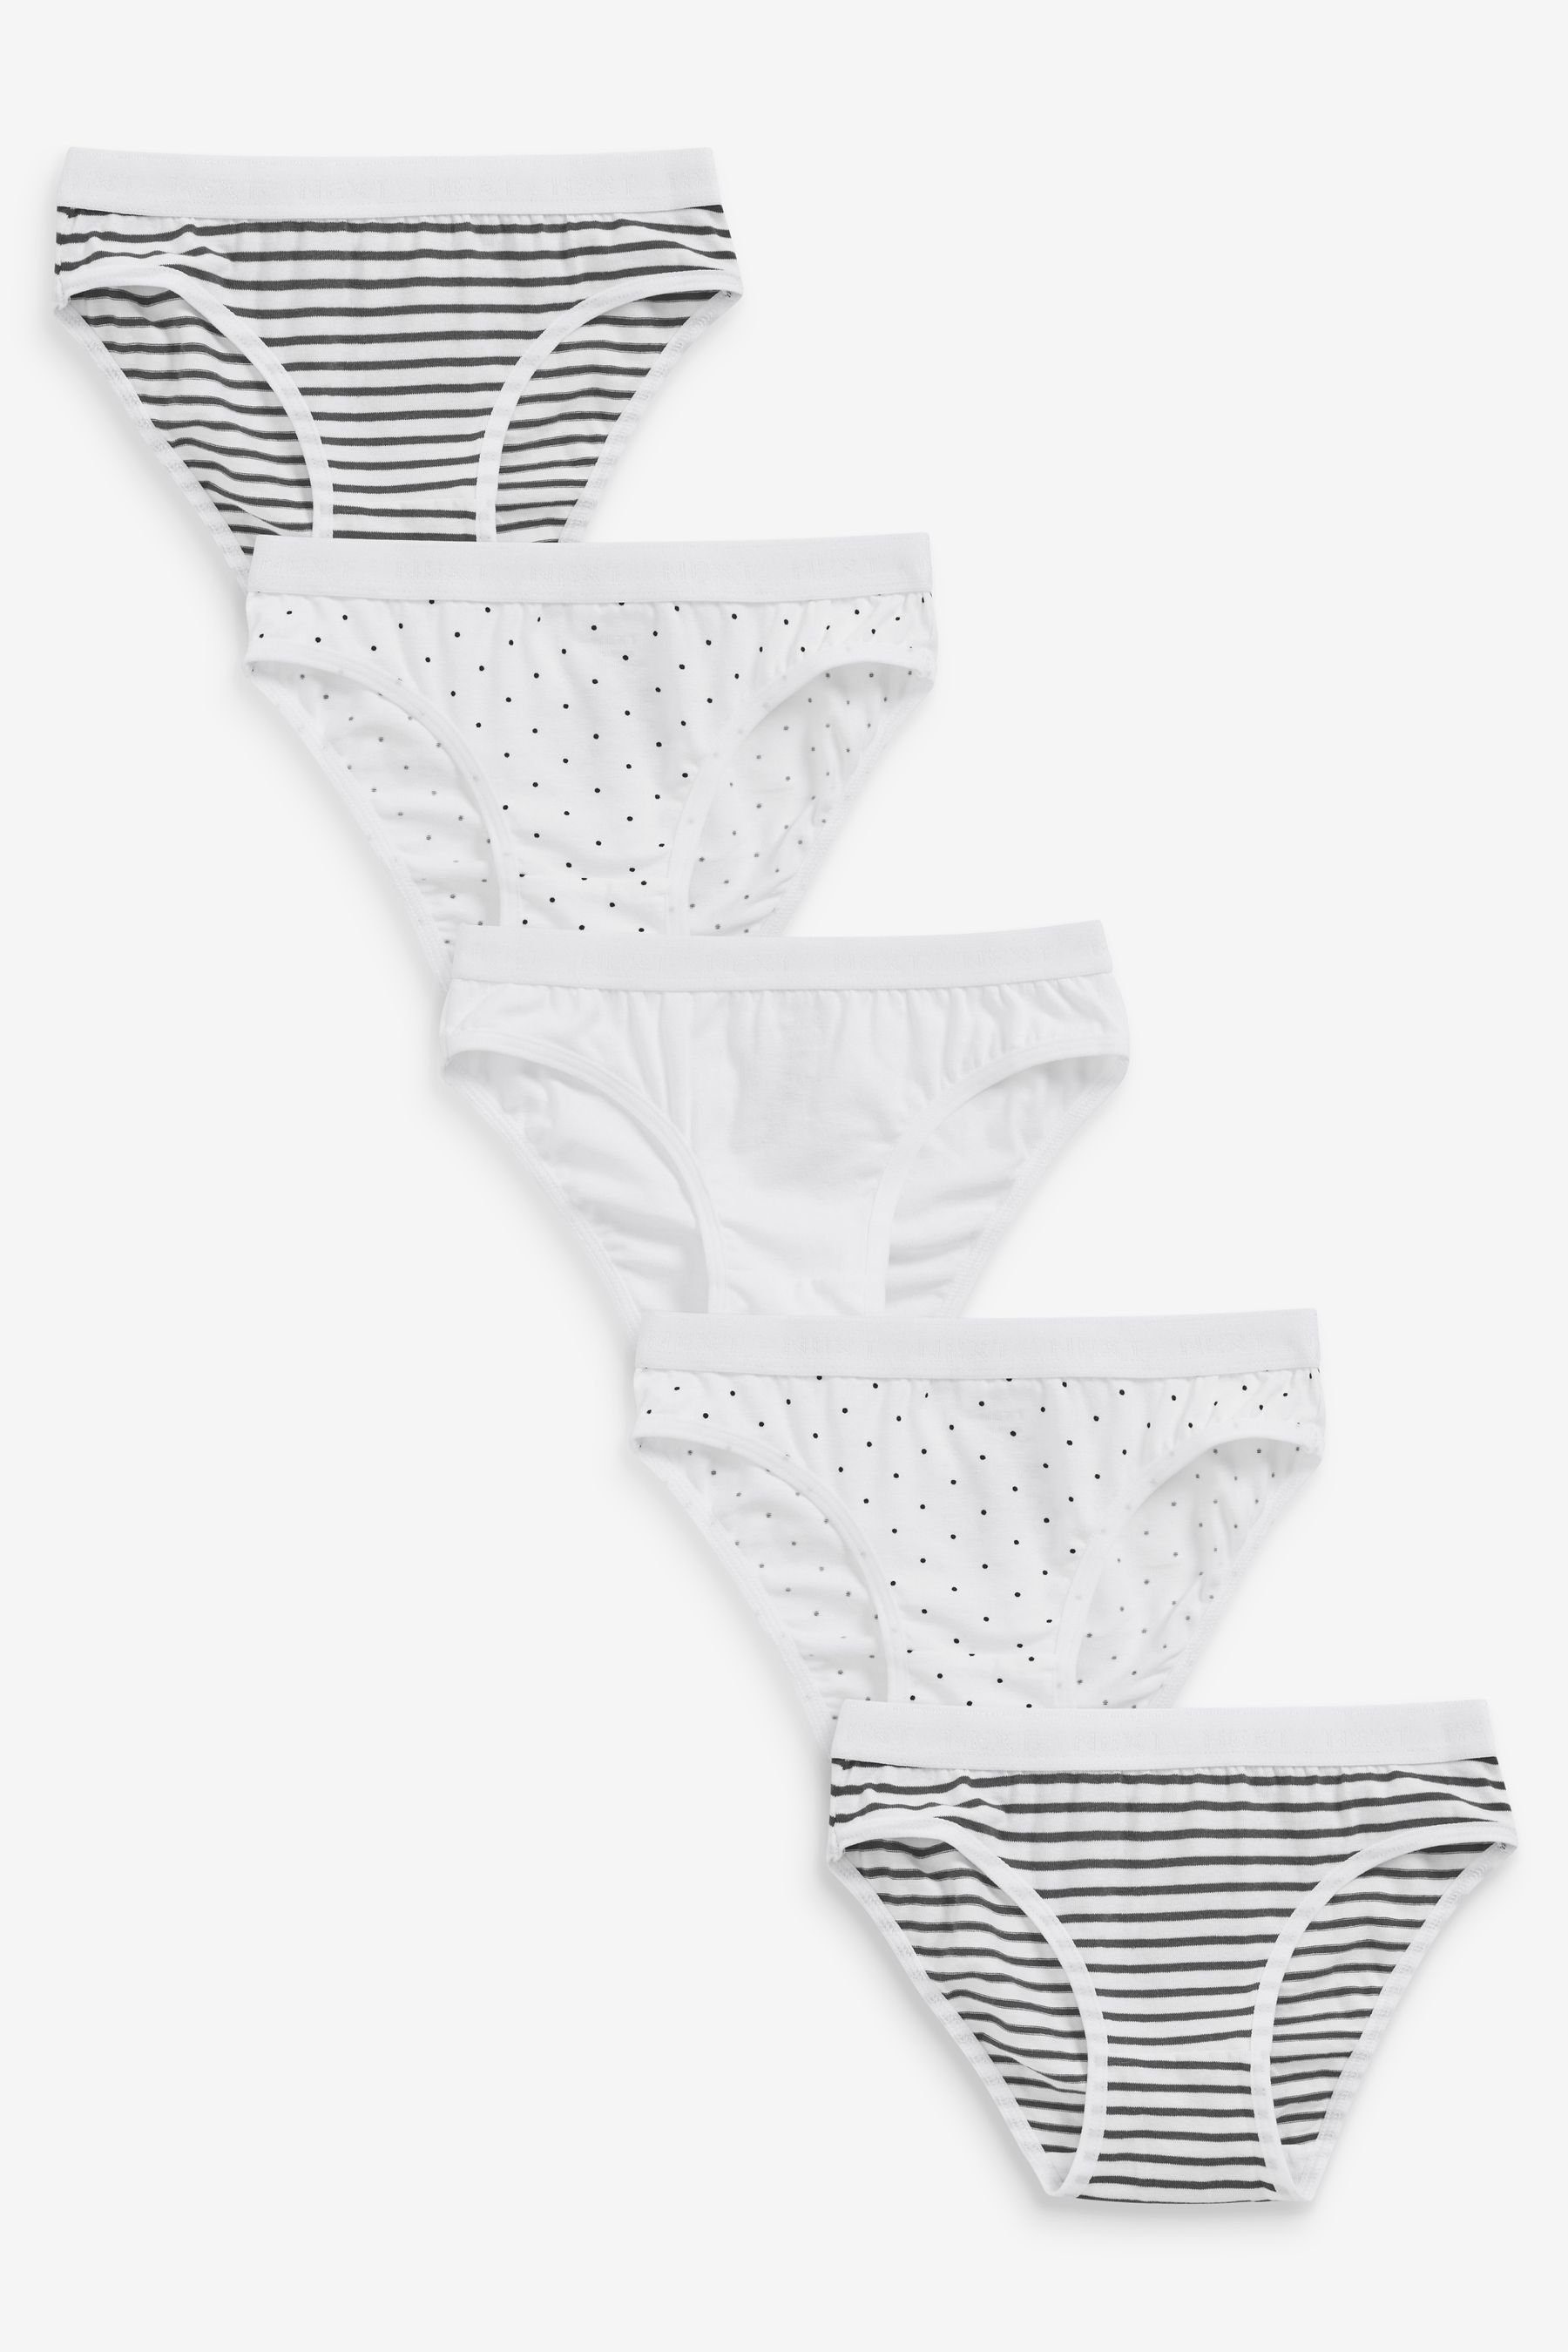 Next Bikinislip Bikini-Slips mit Punkten und Sternen, 5er-Pack (5-St) White/Black